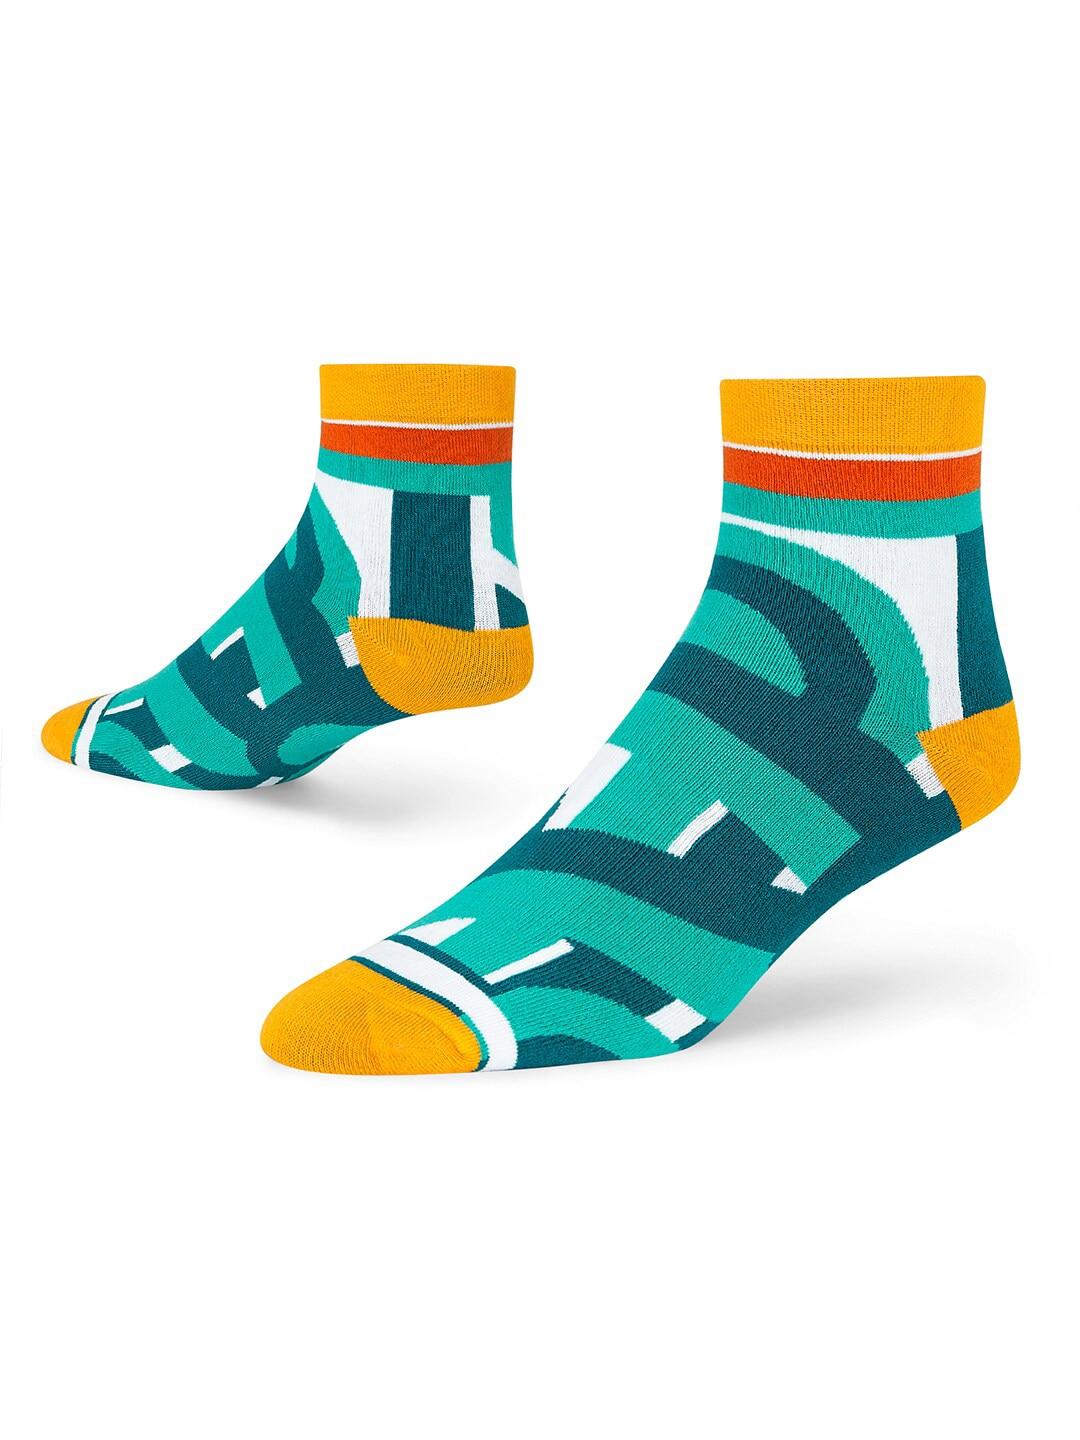 dynamocks-patterned-ankle-length-socks